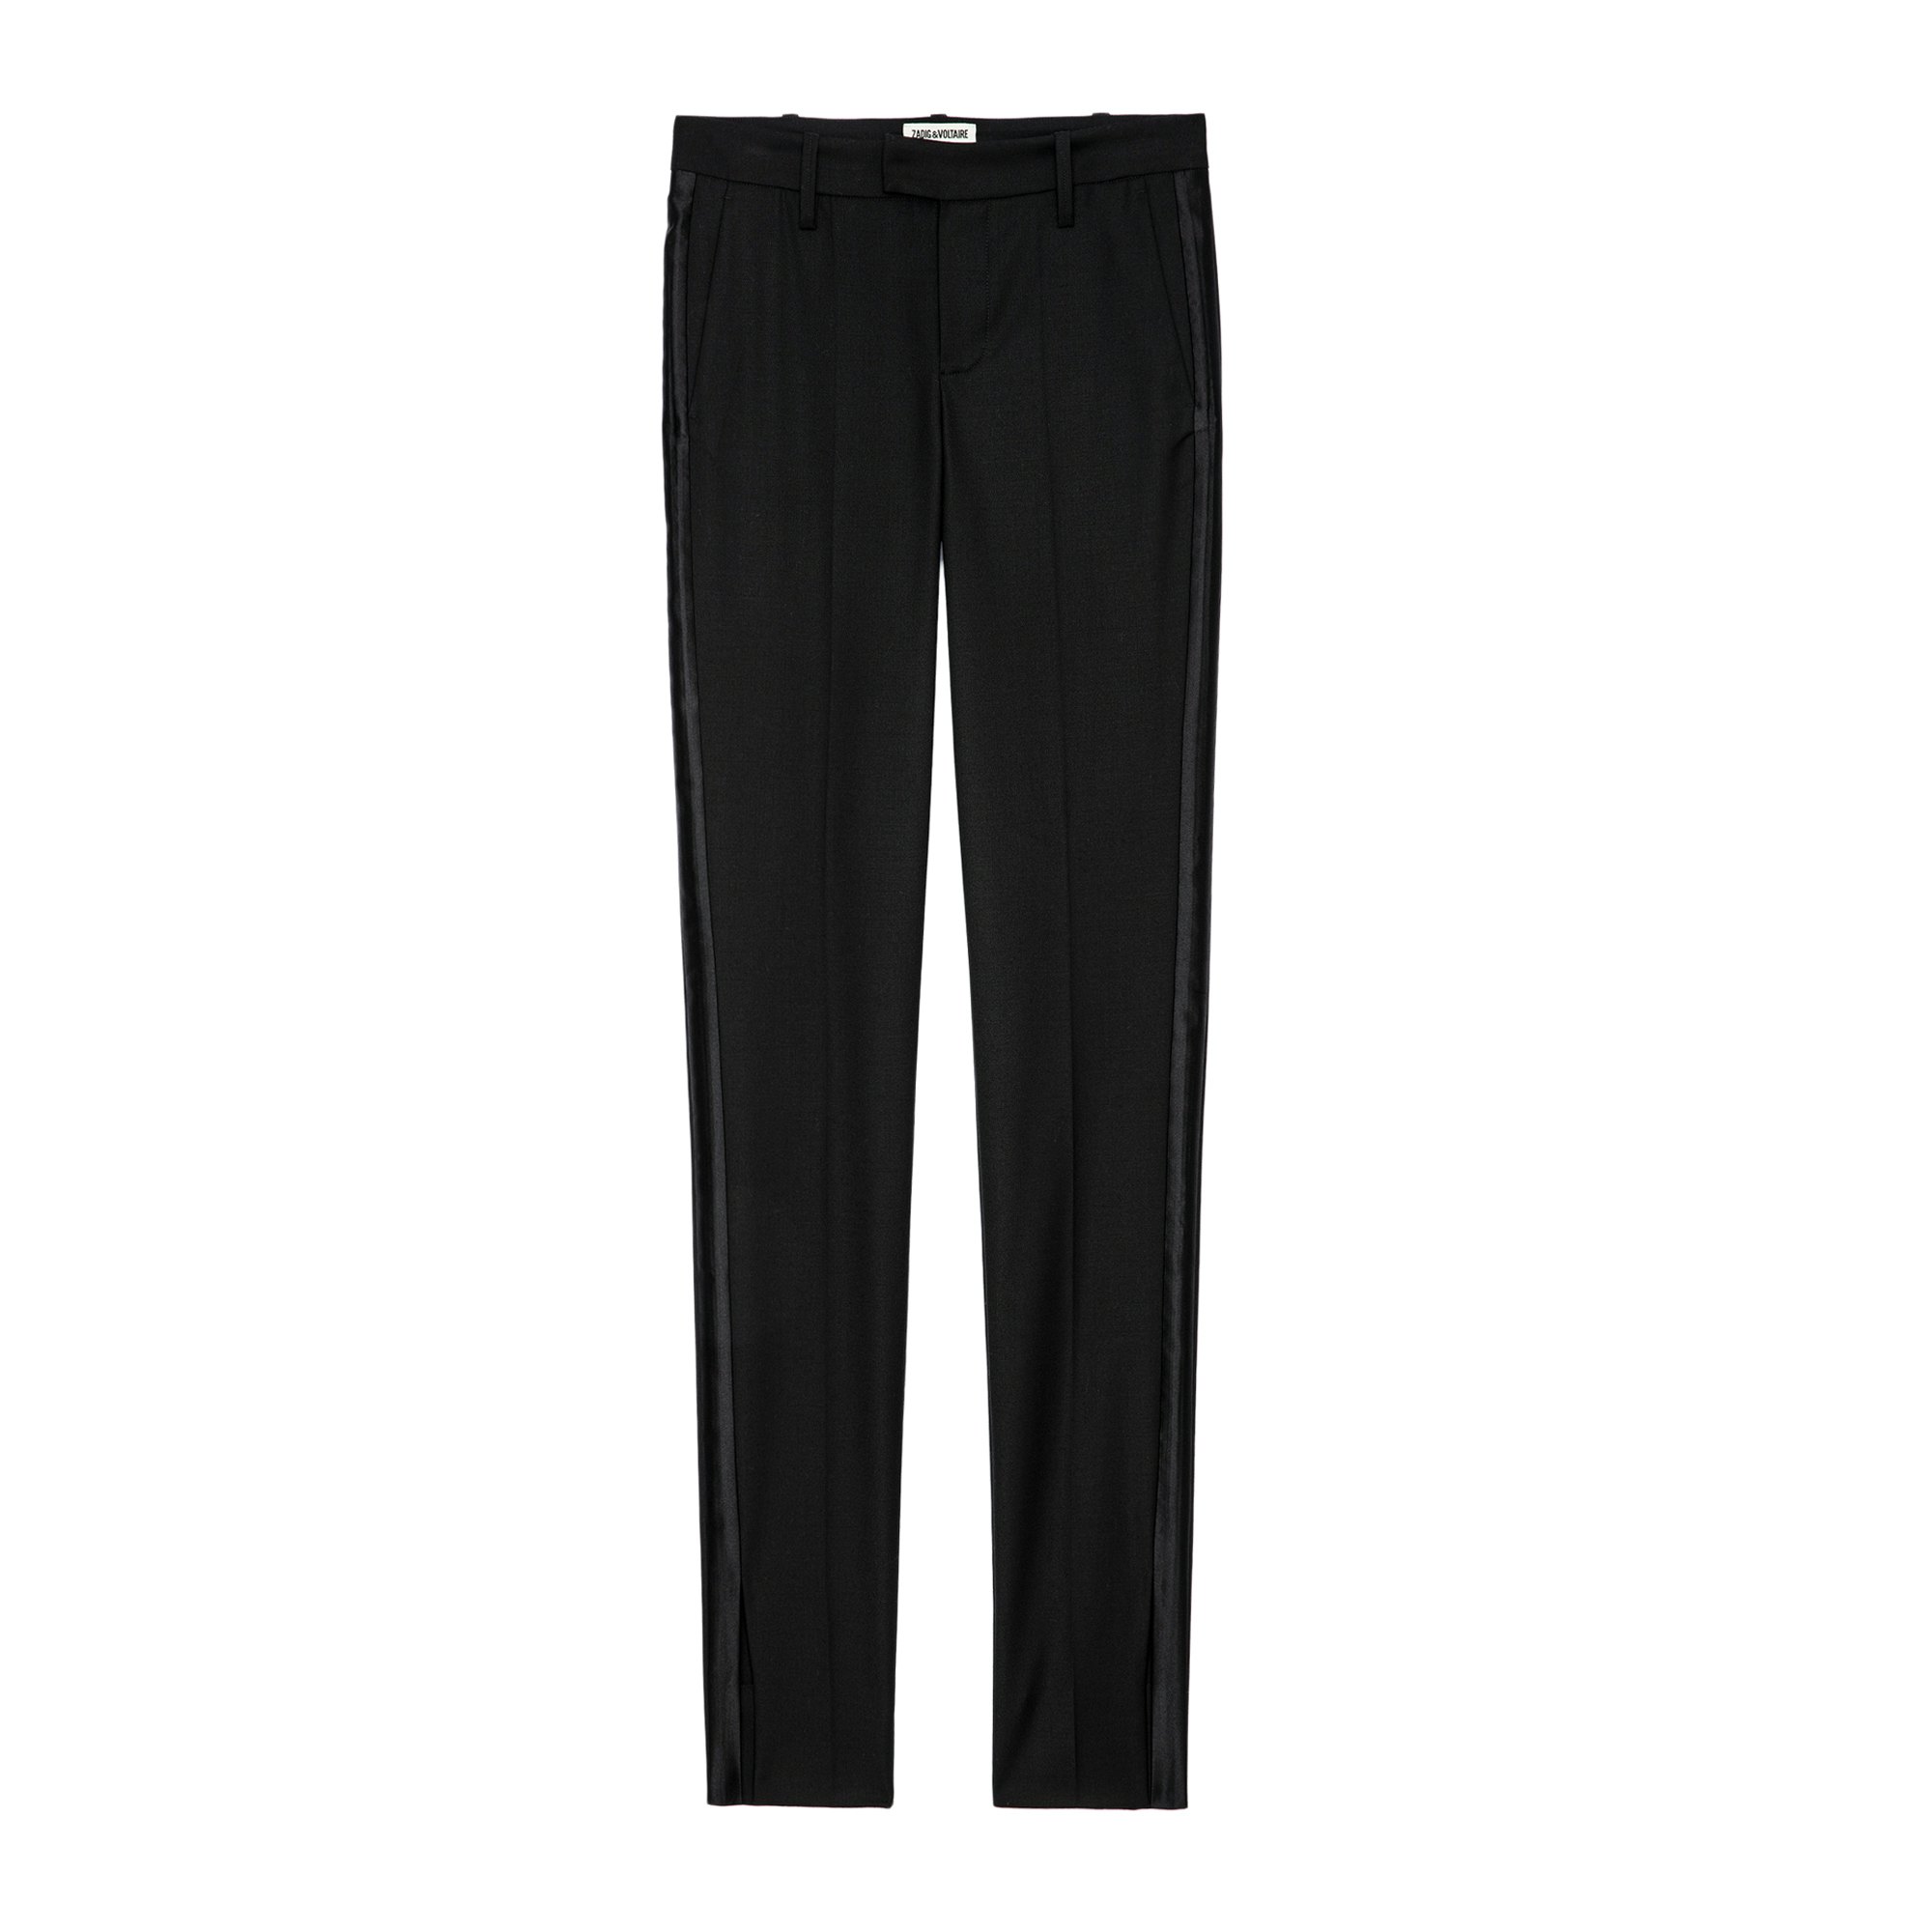 Pantalon Prune Noir - Taille 38 - Femme